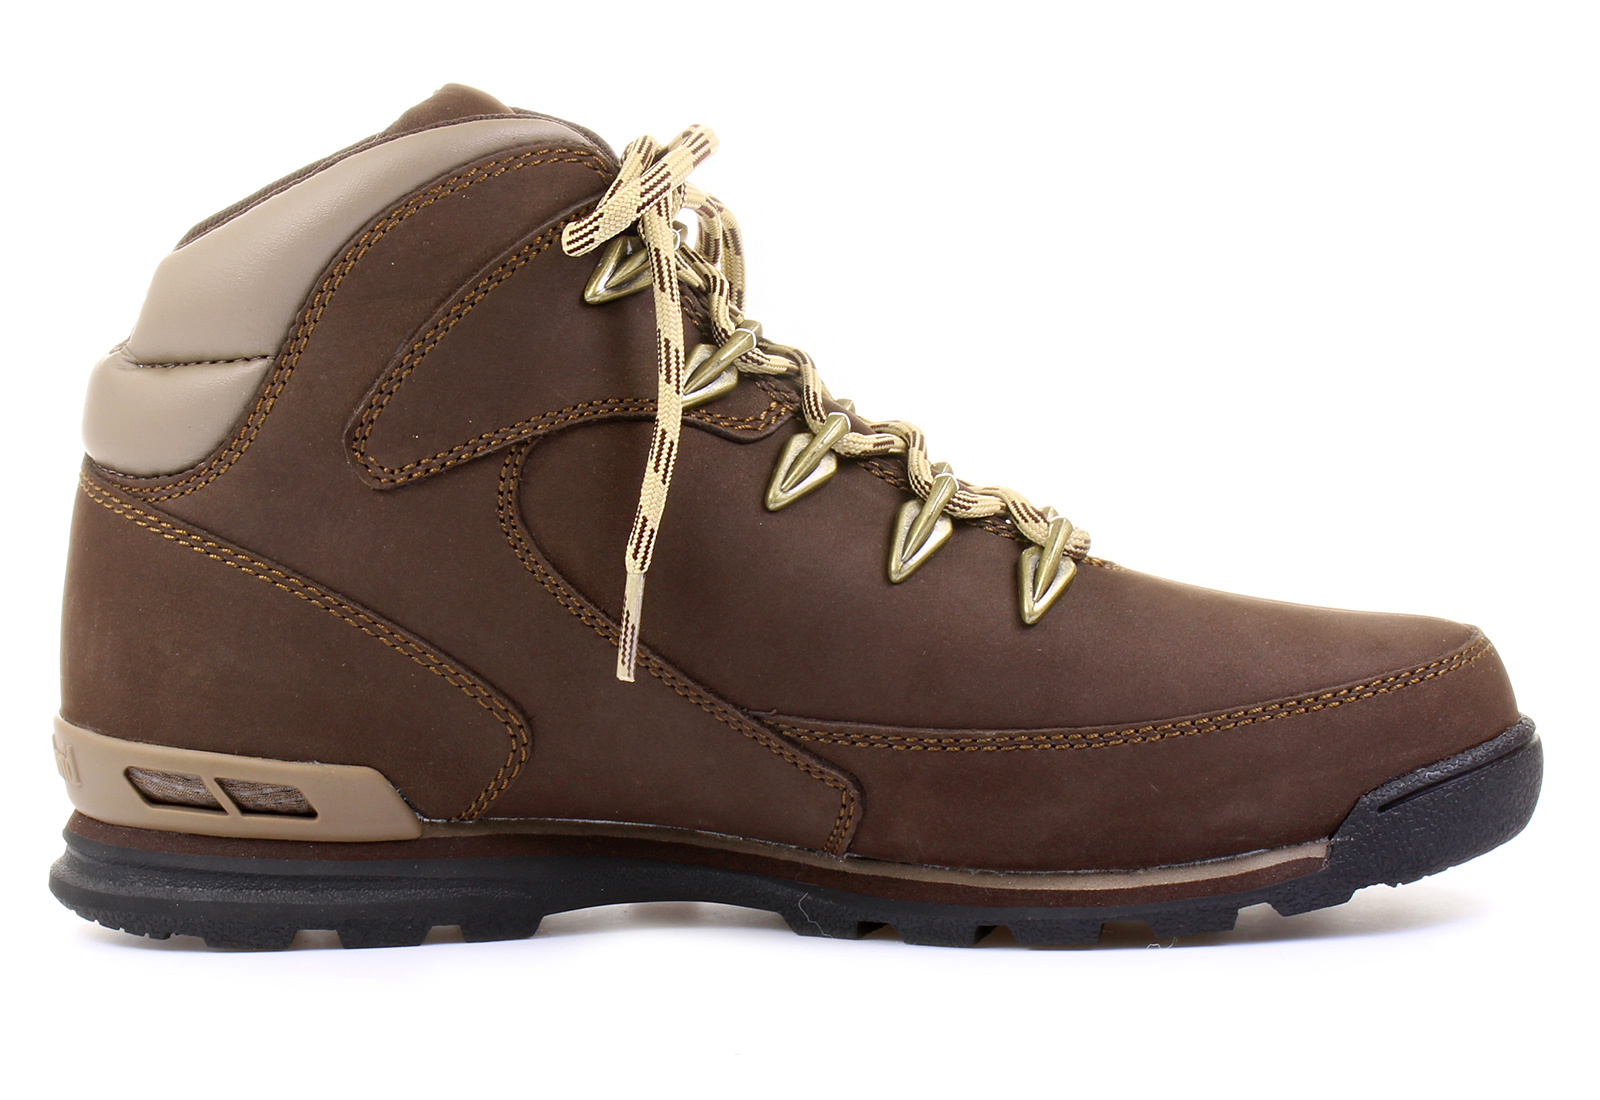 Timberland Boots - Euro Rock Hiker - 6823R-BRN - Online shop for ...